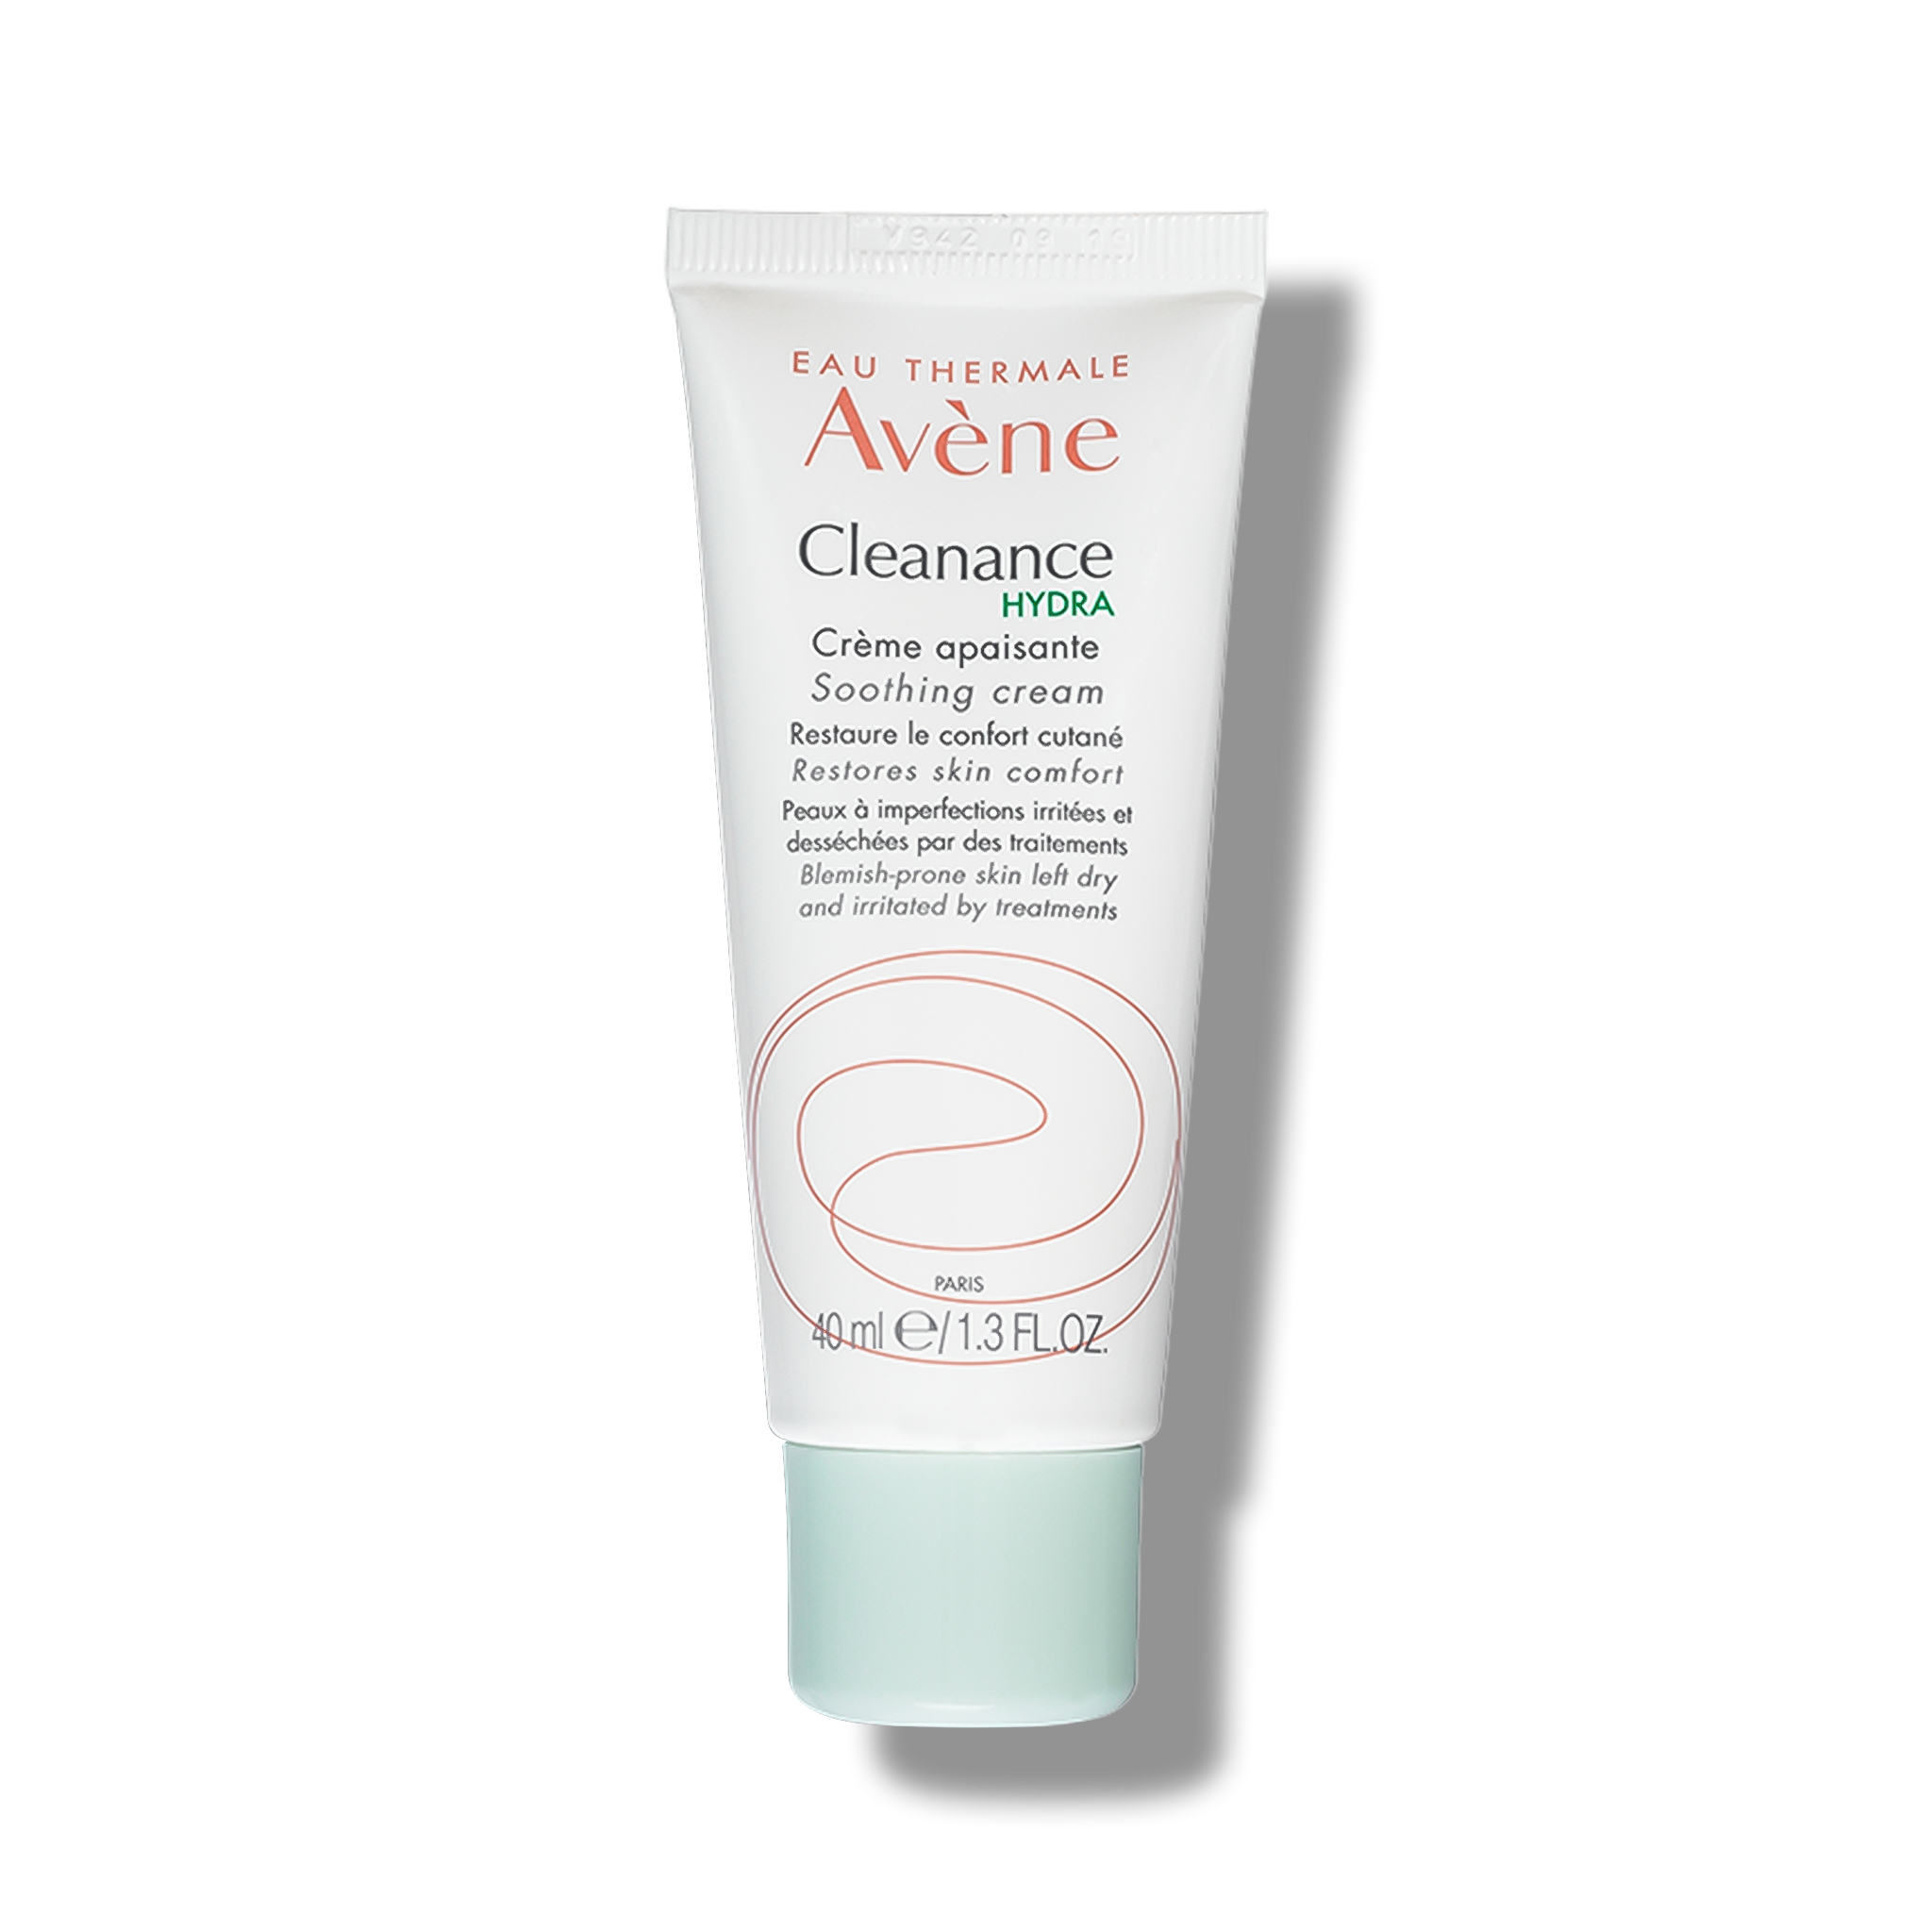 avene-cleanance-hydra-soothing-cream-40ml